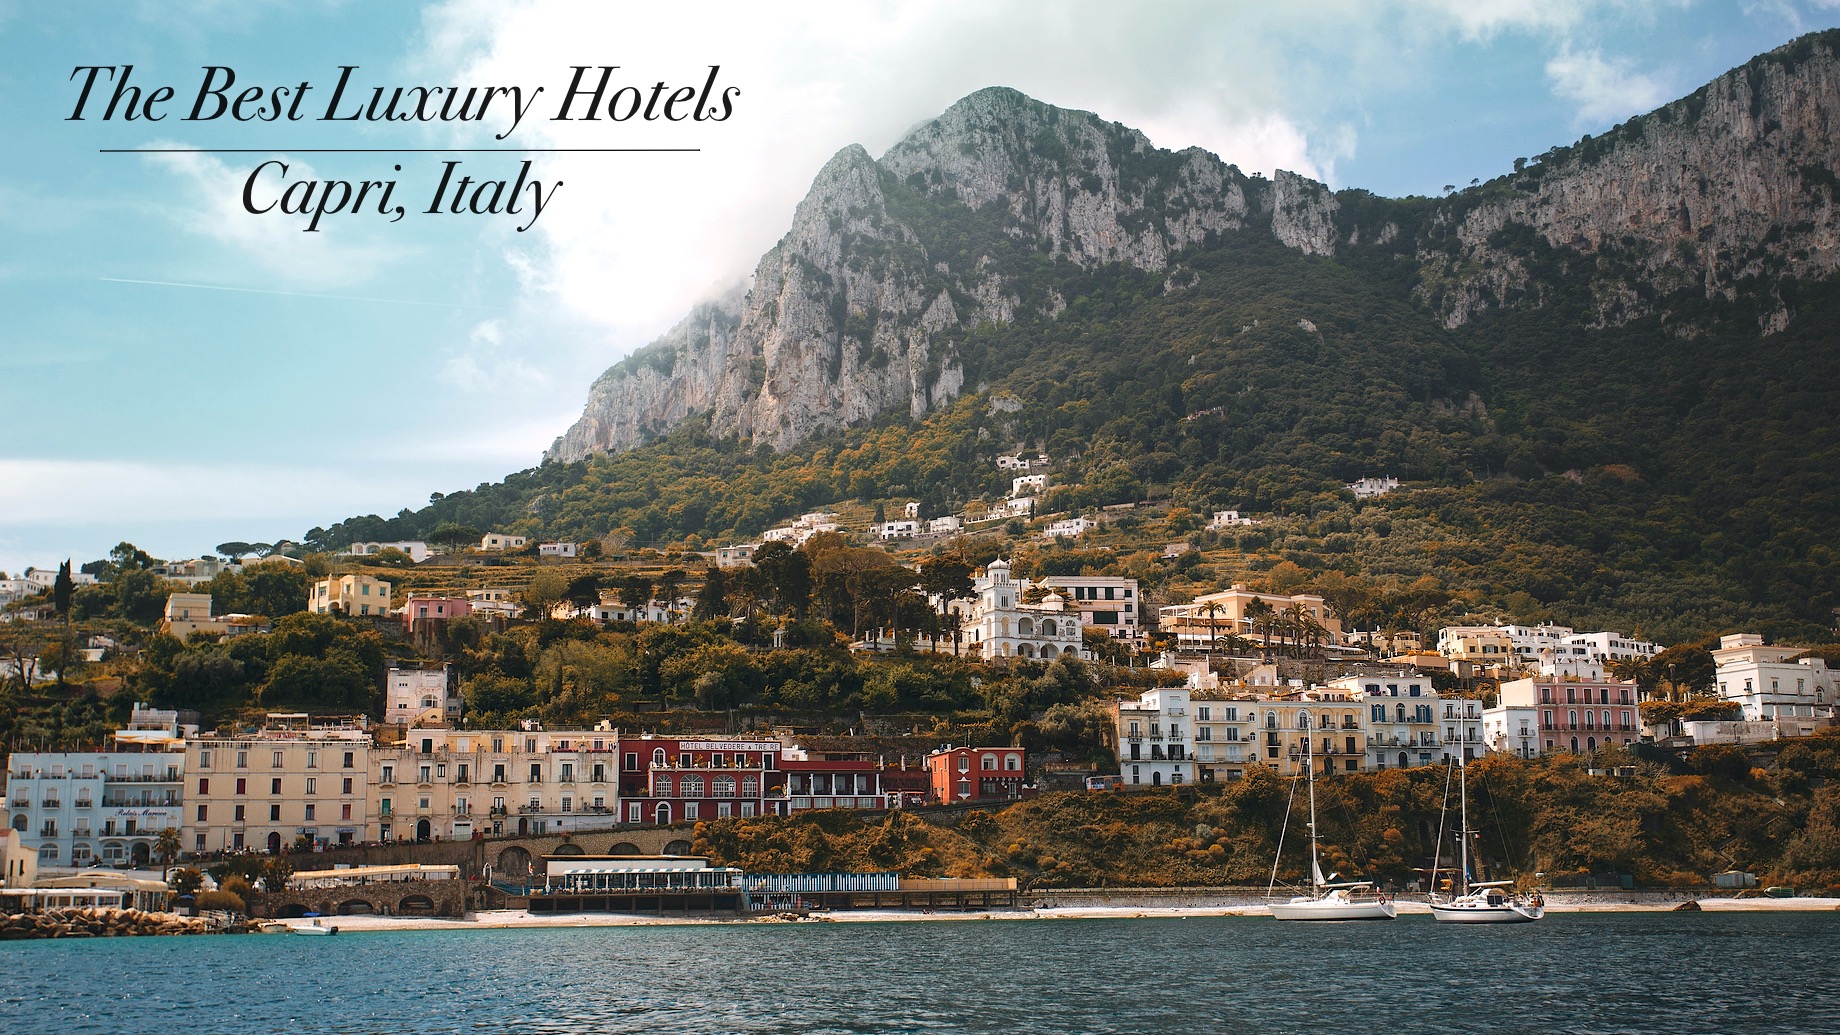 The Best Luxury Hotels in Capri, Italy